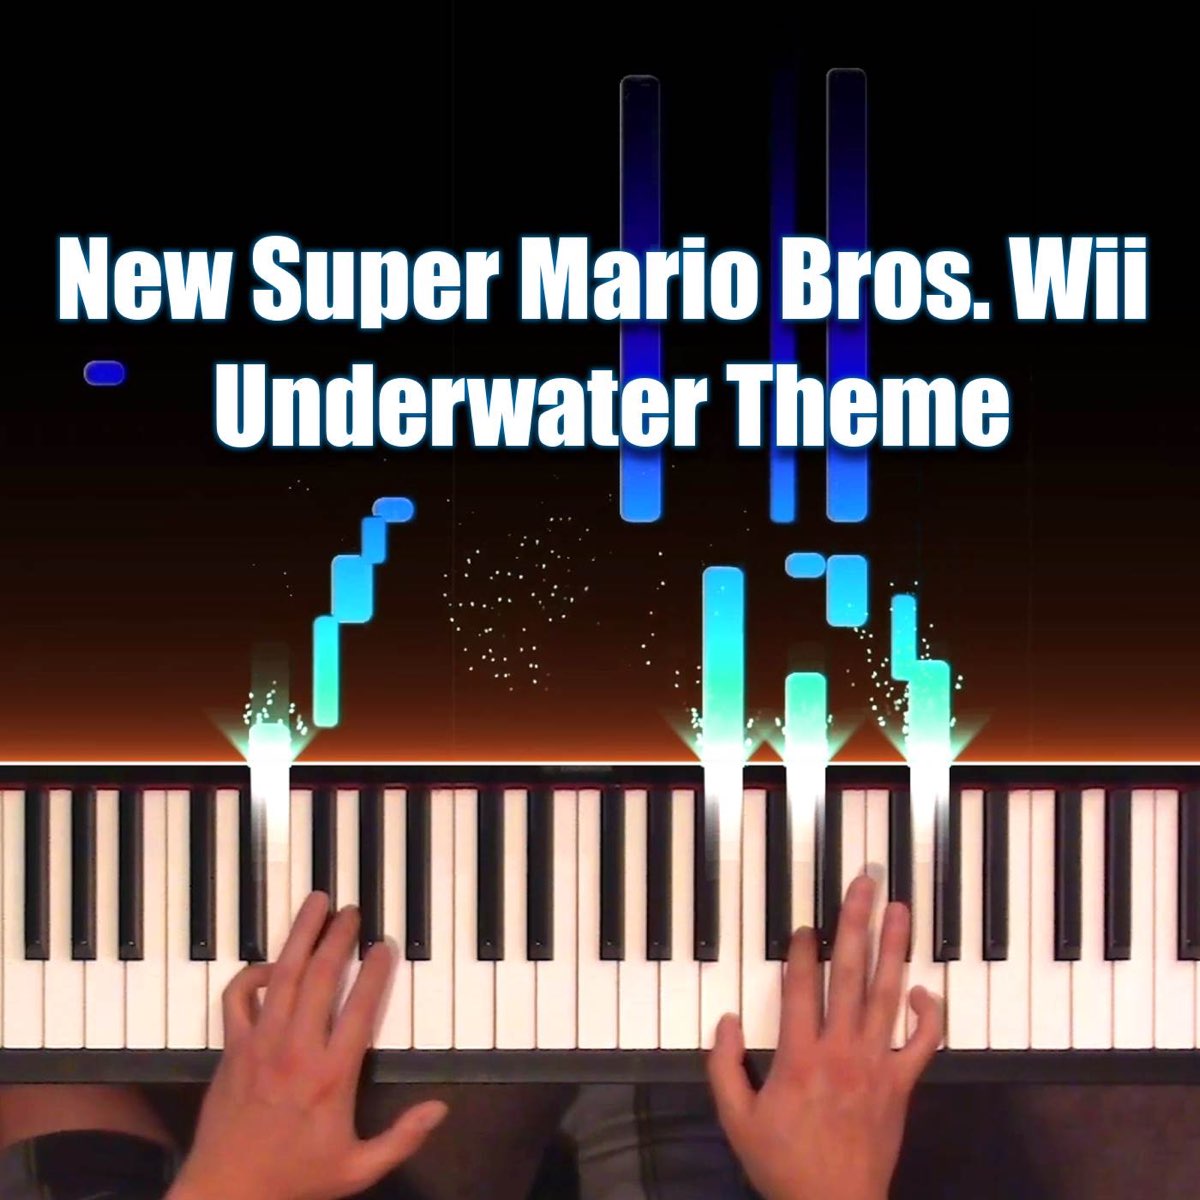 Underwater Theme (From New Super Mario Bros. Wii) [Piano Solo] [Extended]  - Single - Álbum de Erik Correll - Apple Music